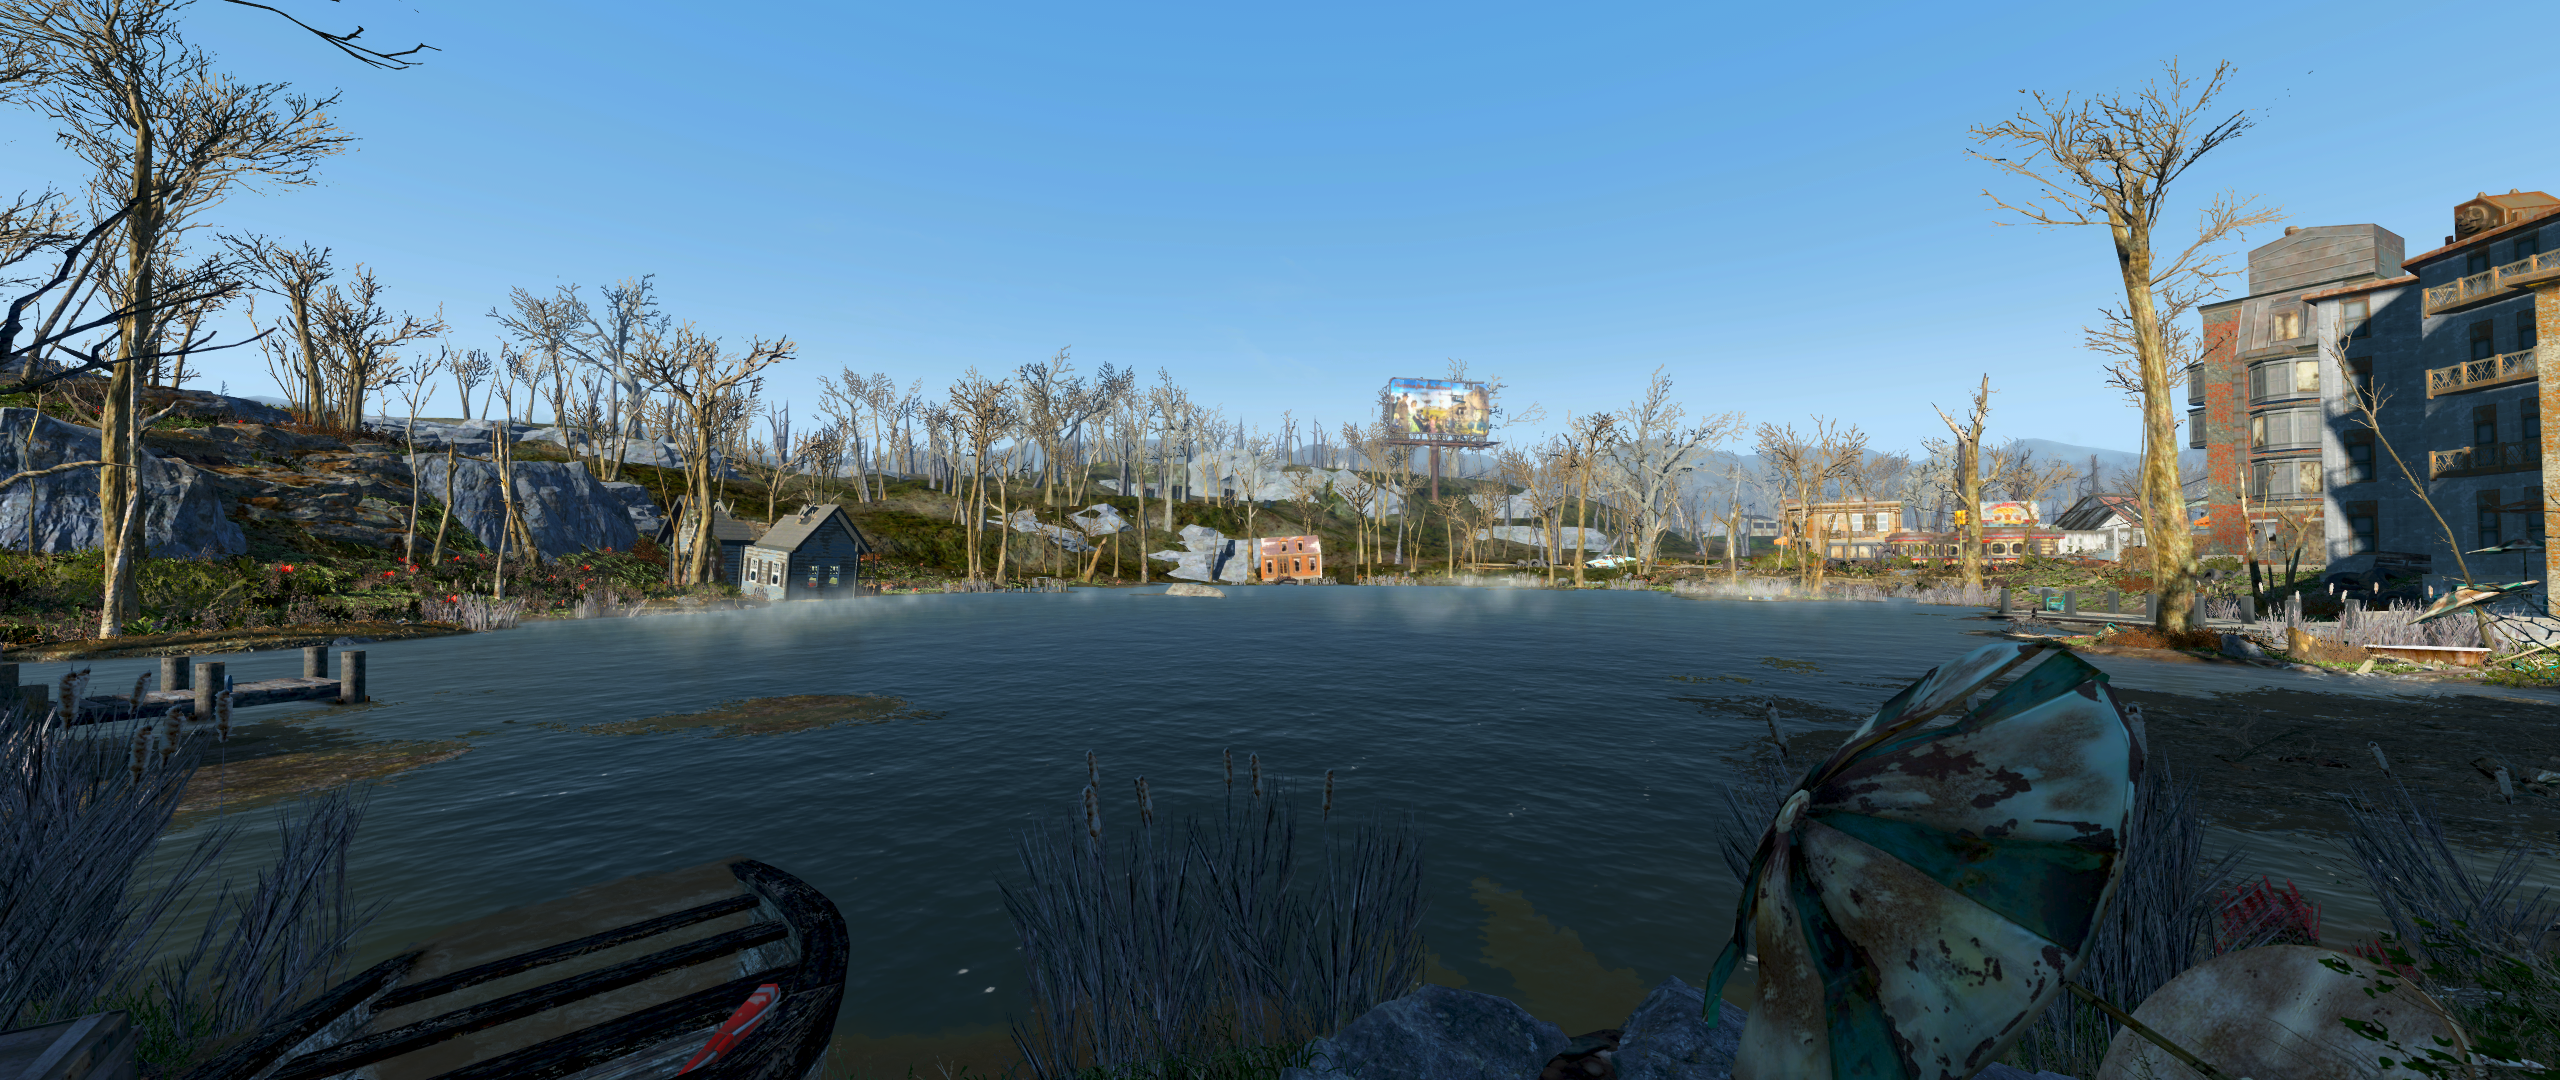 General 2560x1080 Fallout Fallout 4 video game art landscape environment digital art screen shot water sky trees CGI building umbrella video games jetty boat